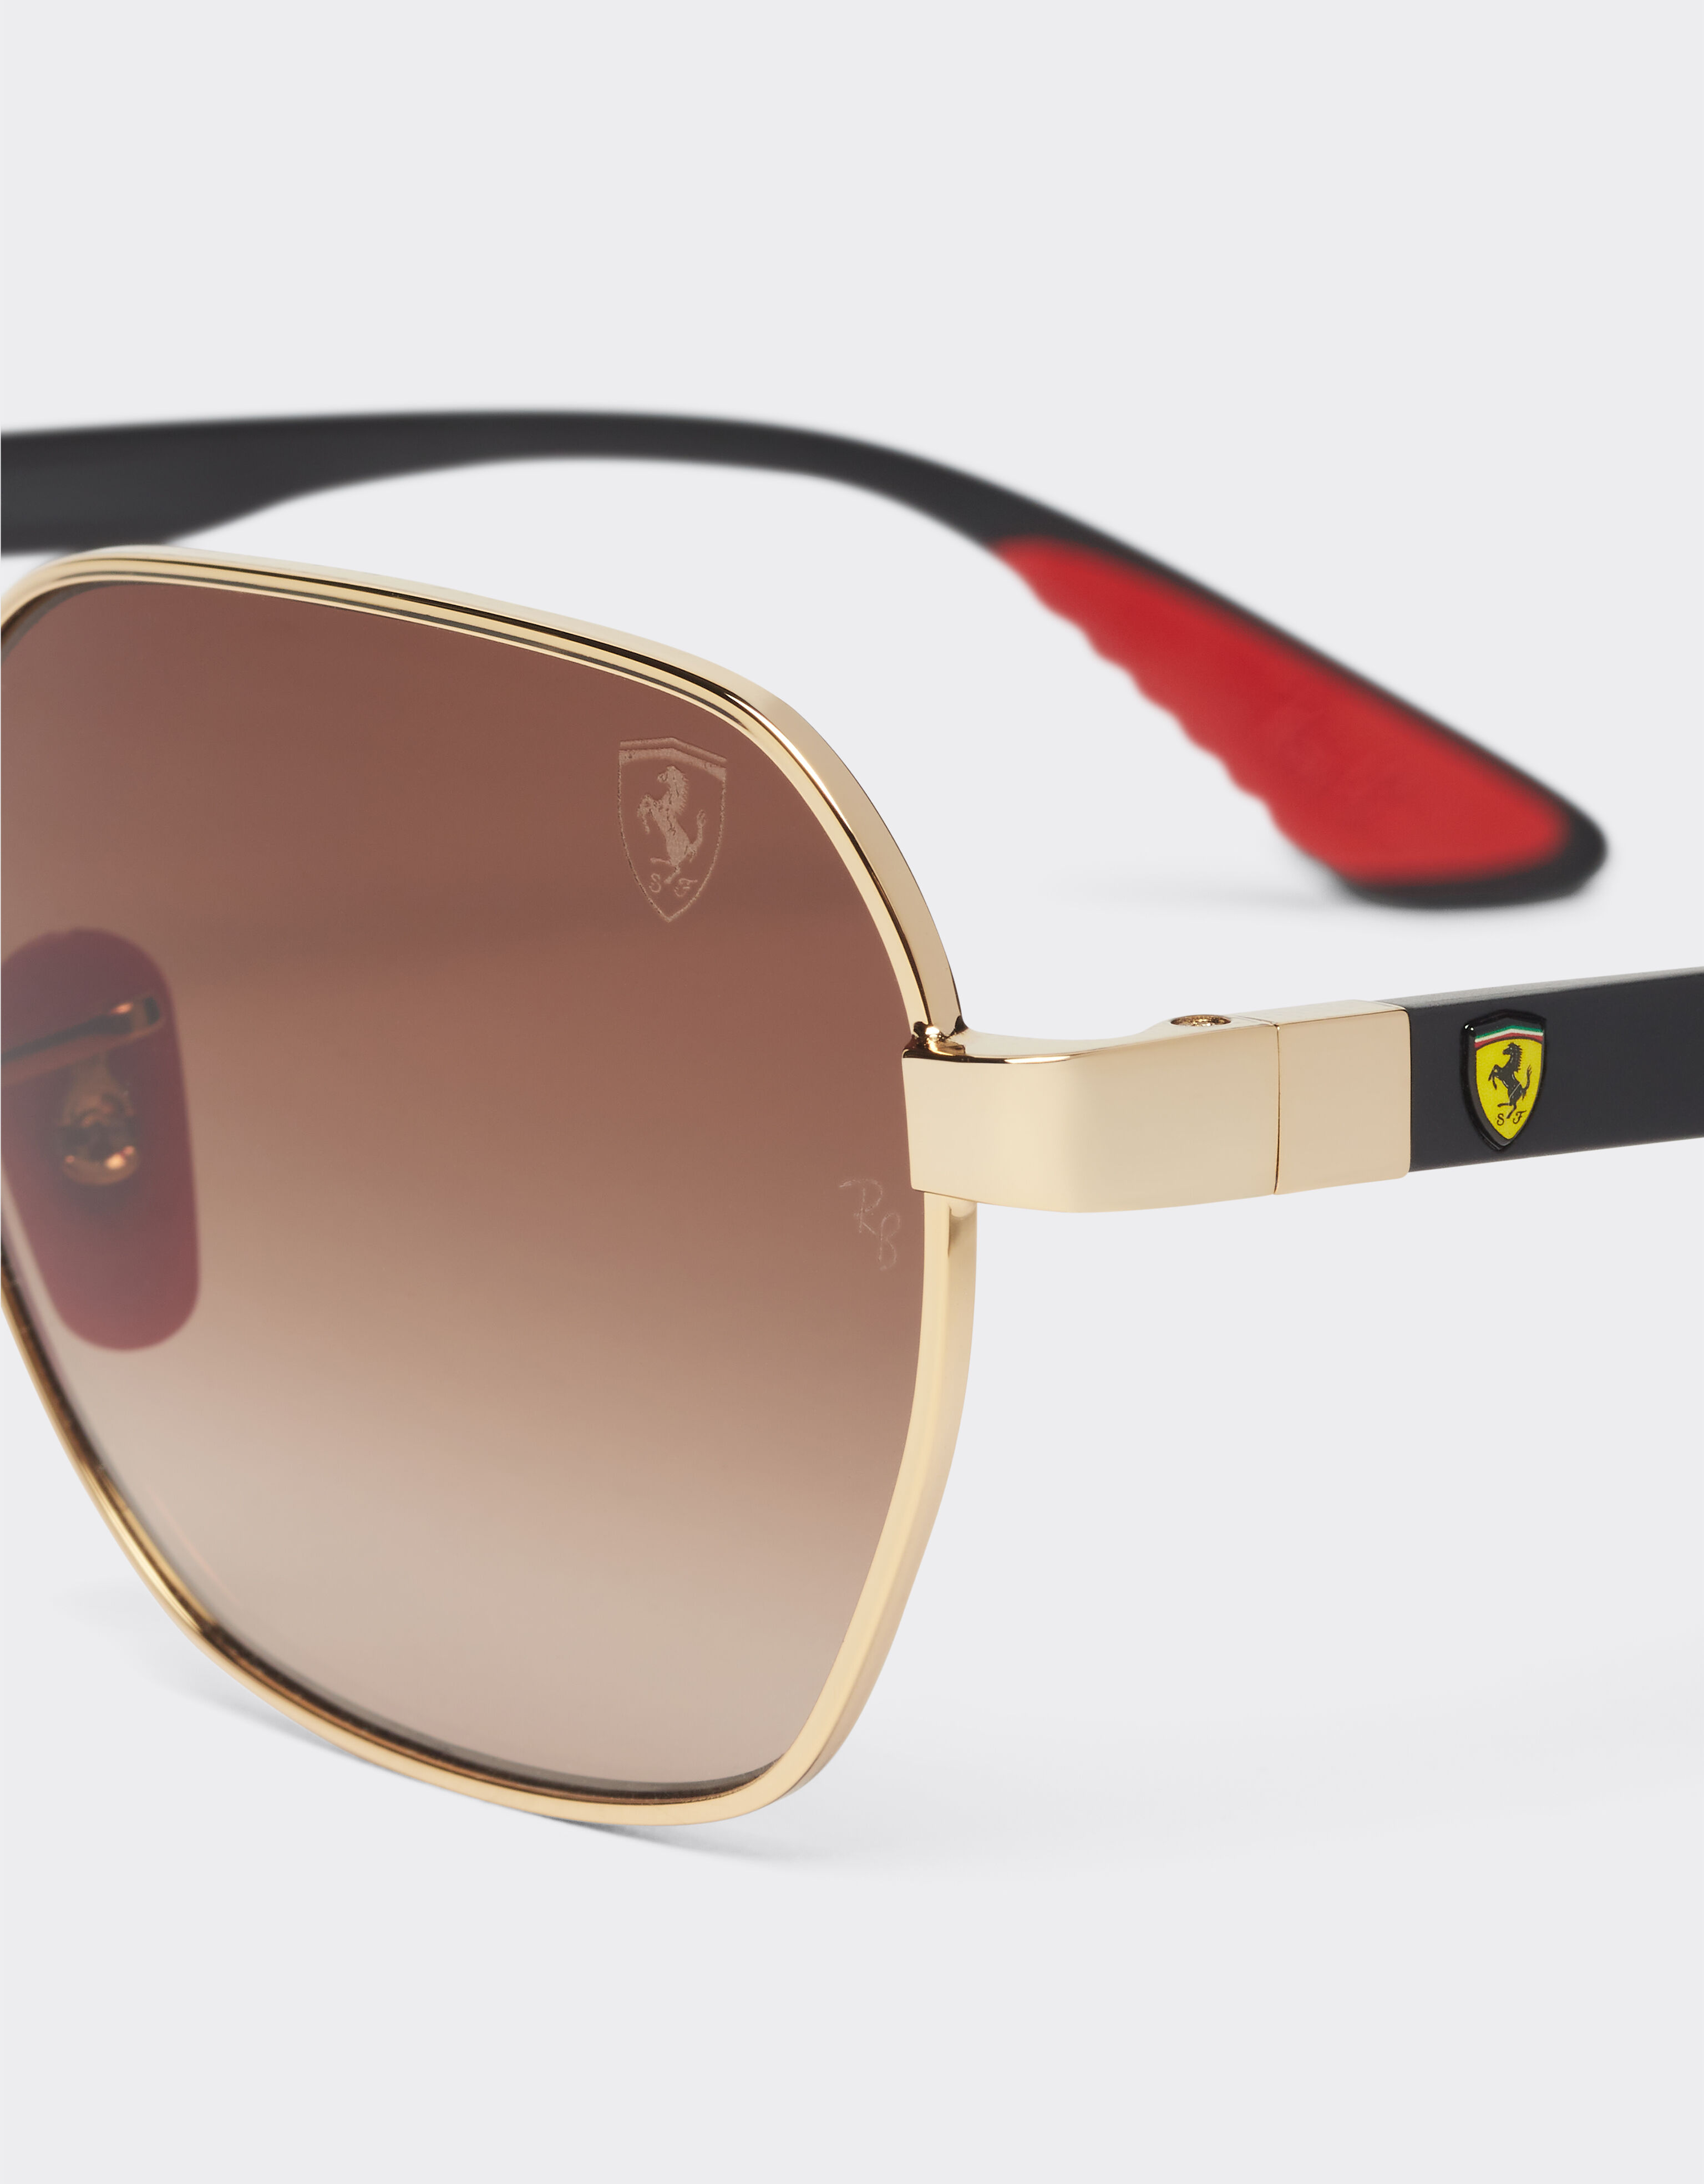 Ferrari Ray-Ban for Scuderia Ferrari 0RB3794M gold-tone sunglasses with gradient brown lenses Beige F1299f